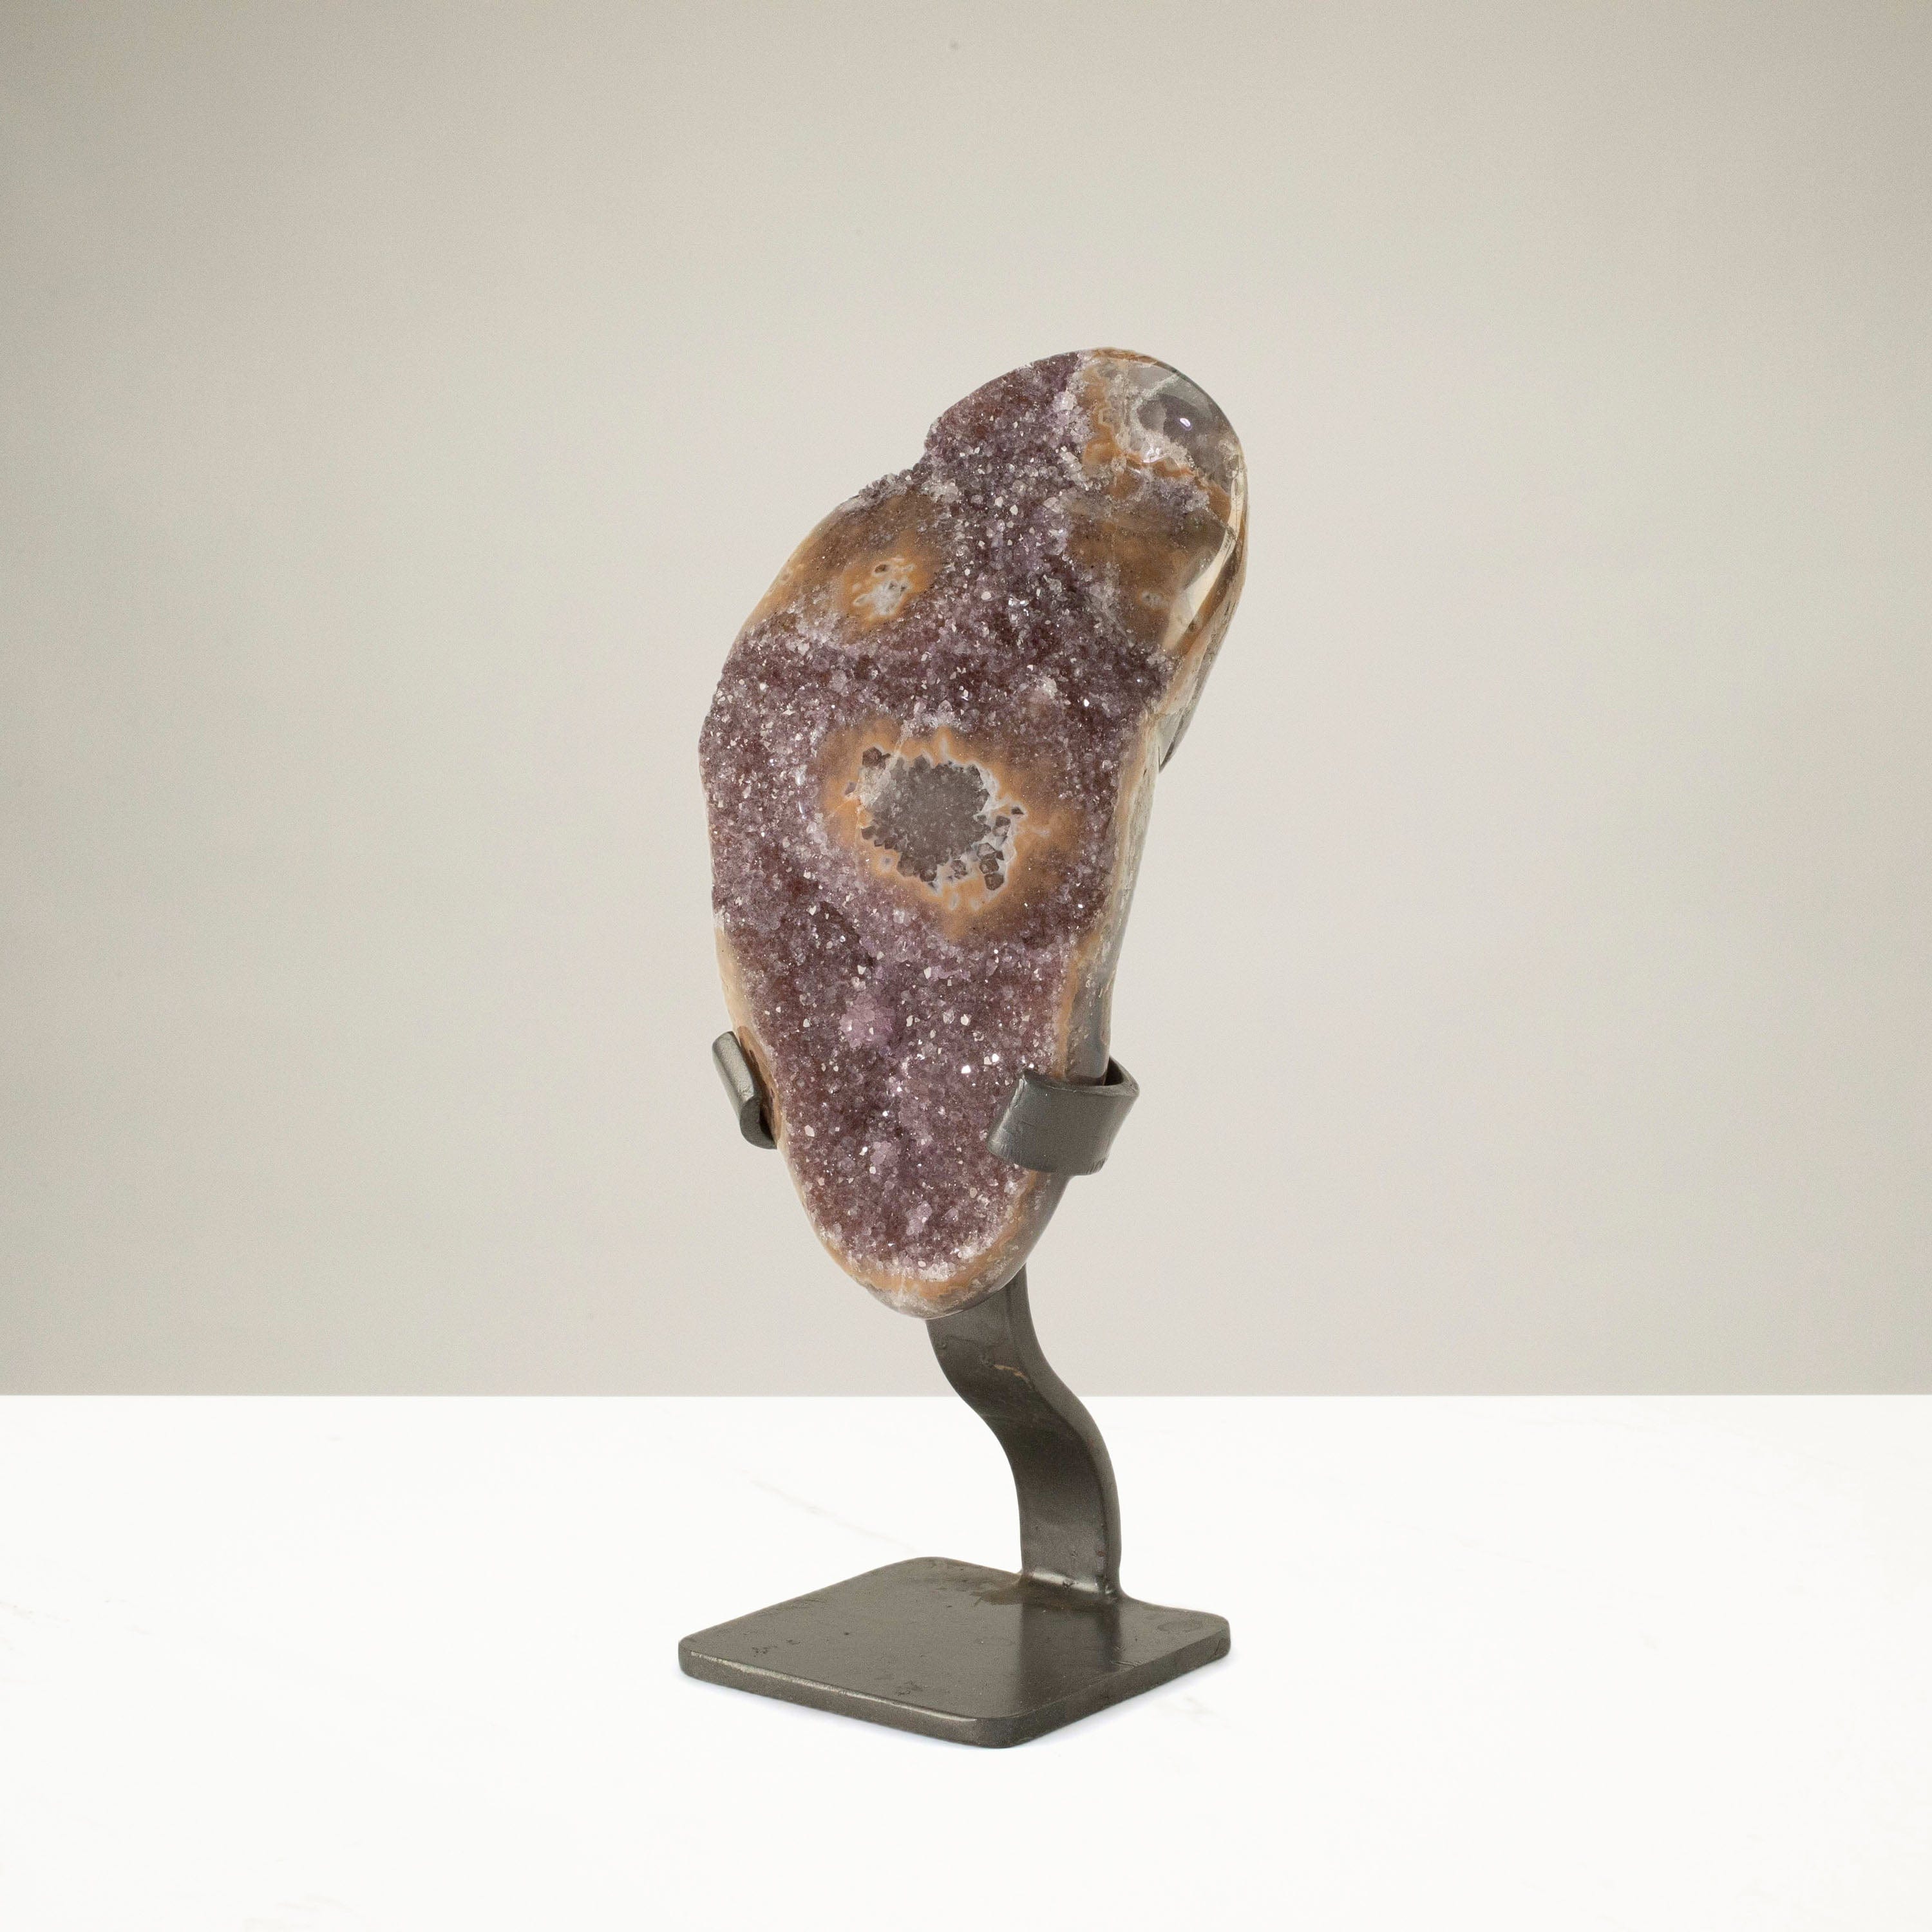 Kalifano Amethyst Uruguayan Amethyst Geode on Custom Stand - 7.3 lbs / 11.5 in. UAG1700.018